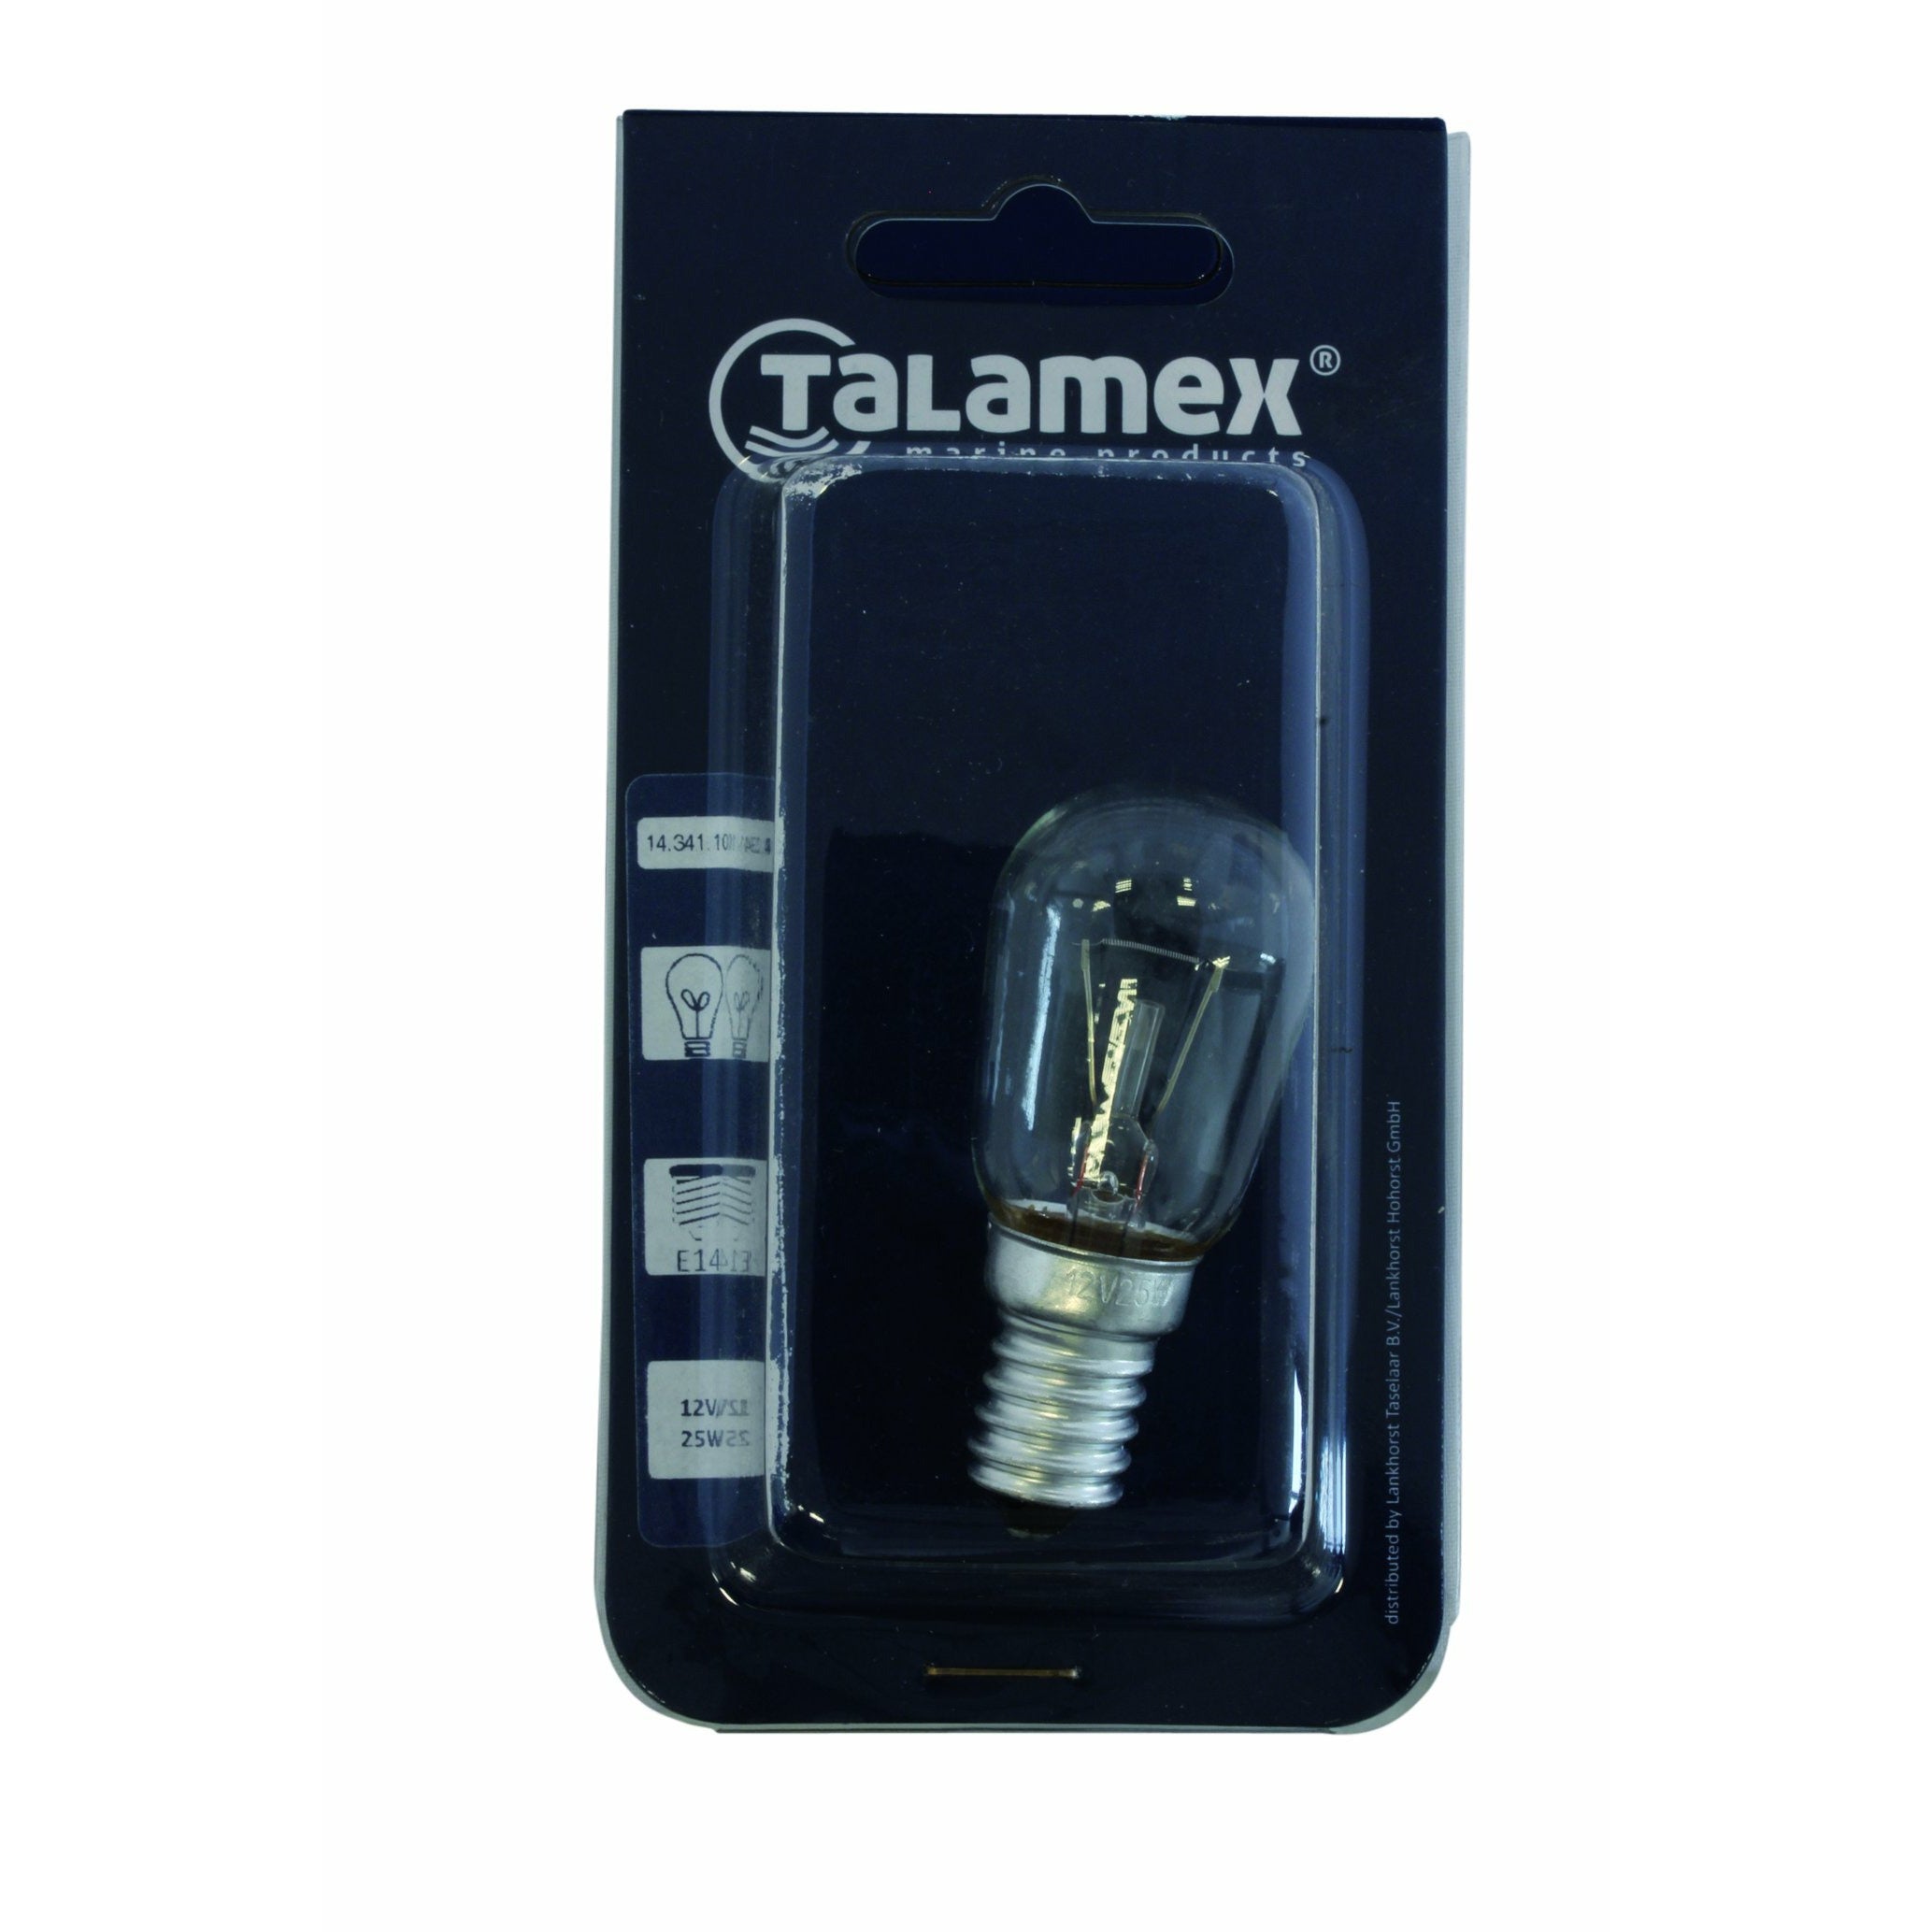 Talamex Perfumelamp 12V-25W E14 14341101